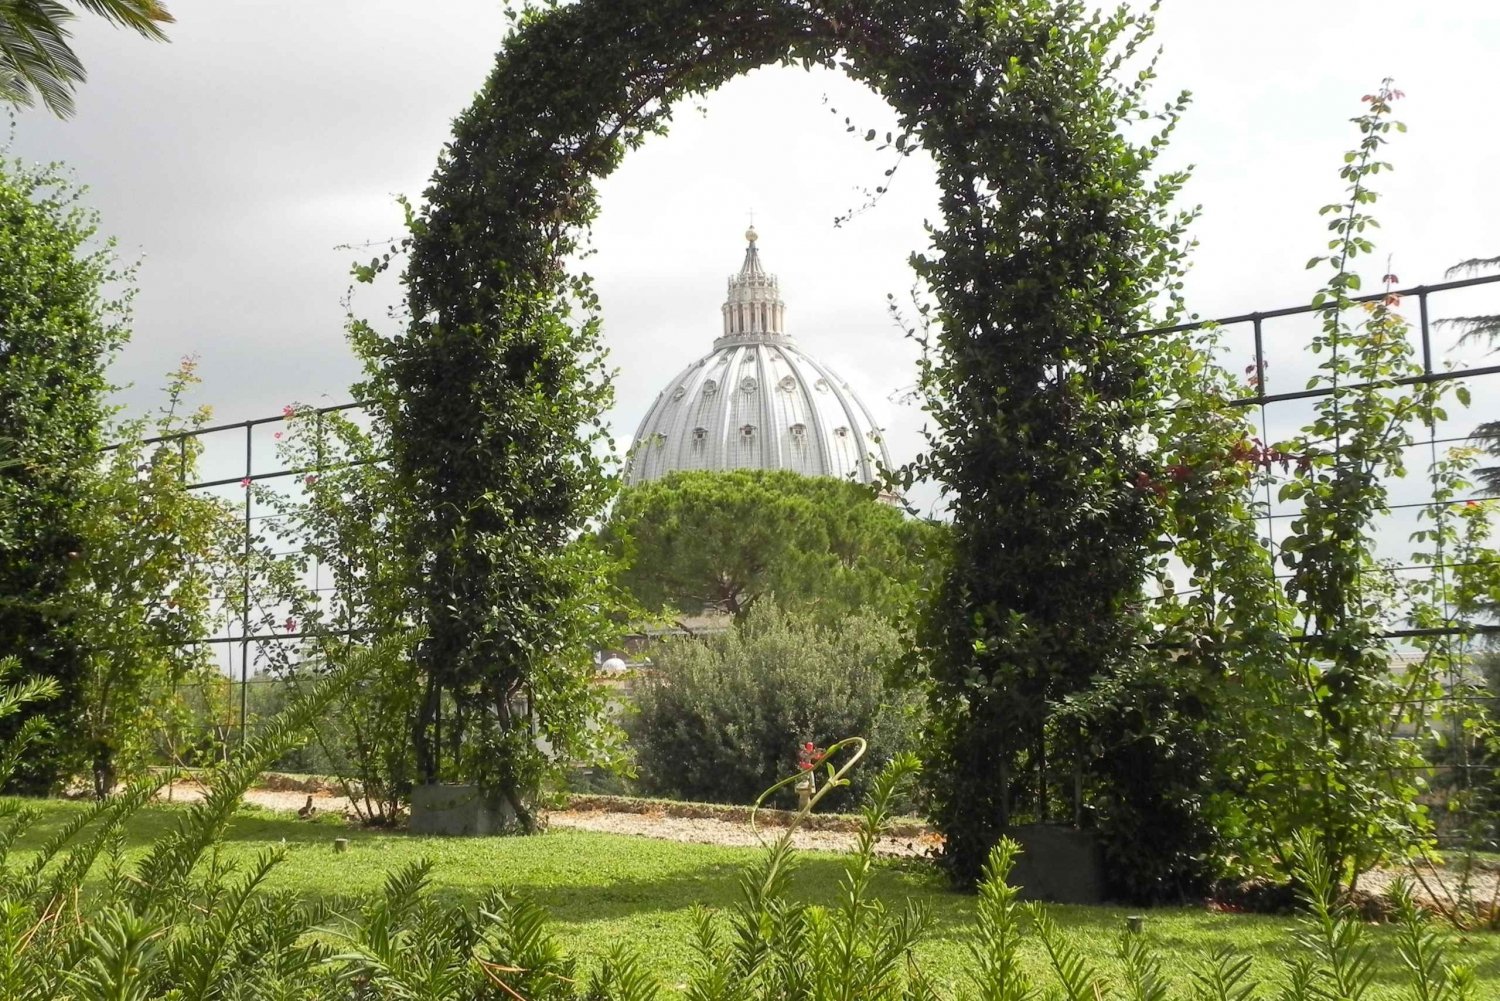 Vatican: Vatican Gardens by minibus and Castel Sant'Angelo